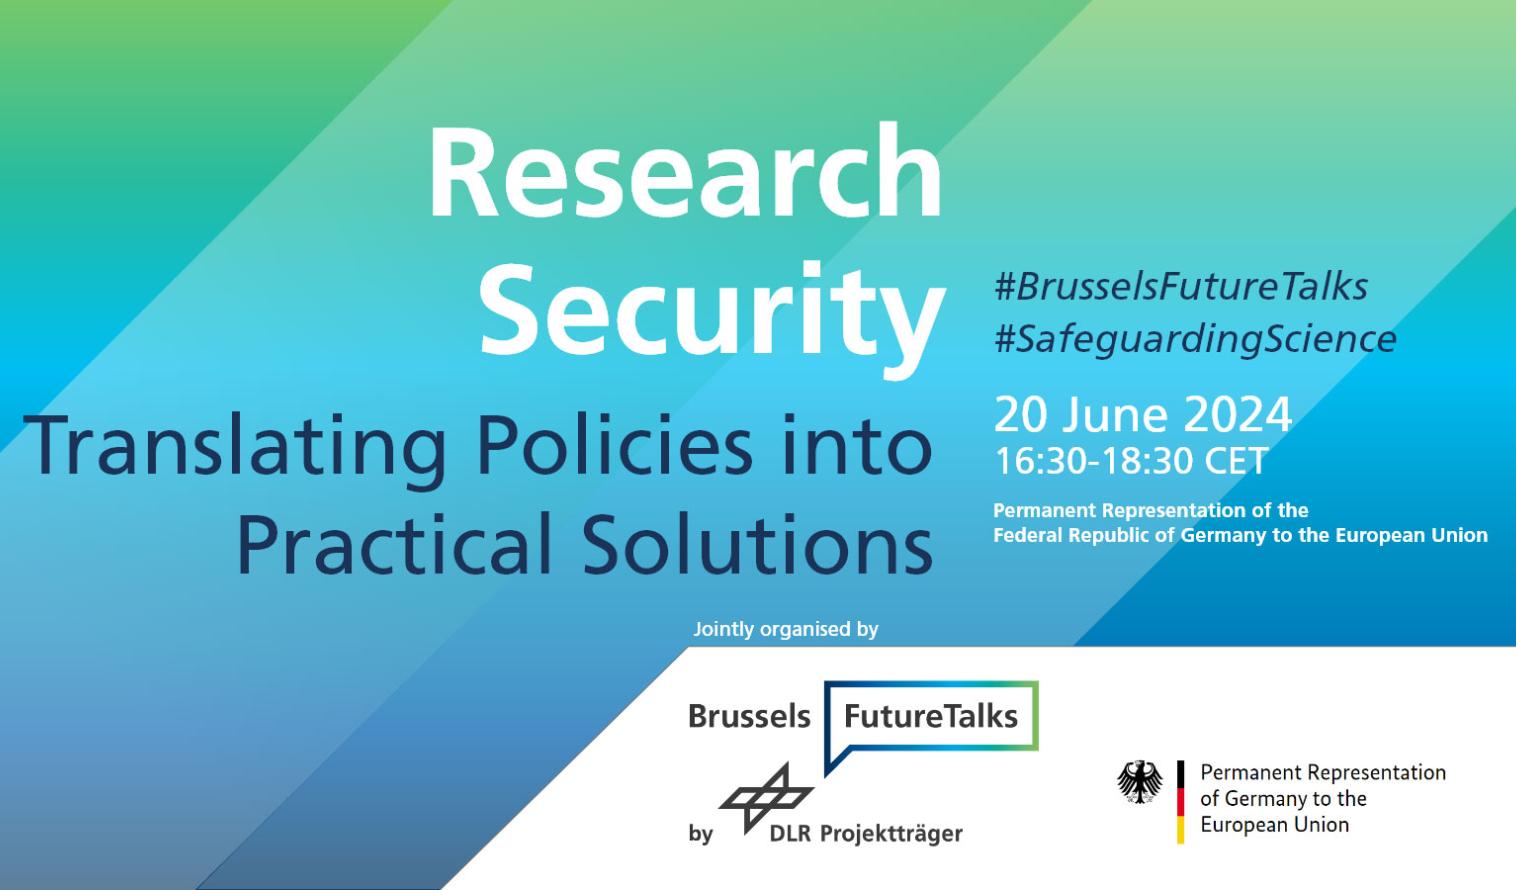 Key Visual Veranstaltung: Brussels FutureTalks zu Research Security